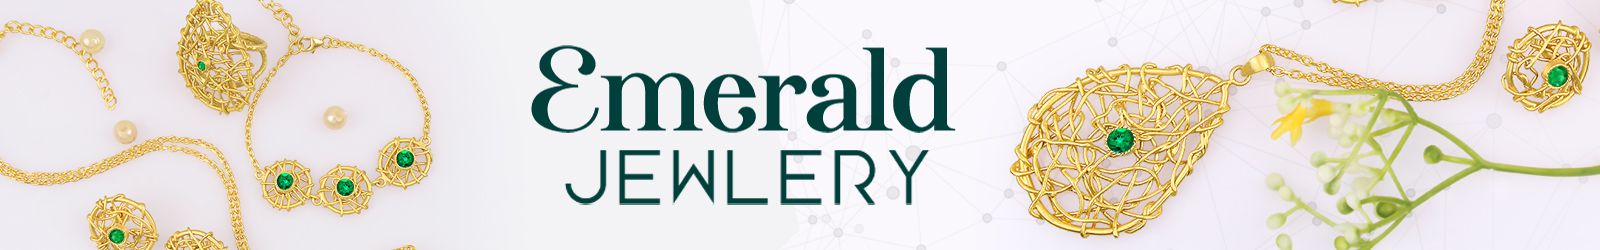 Silver Emerald Jewelry Wholesale Supplier